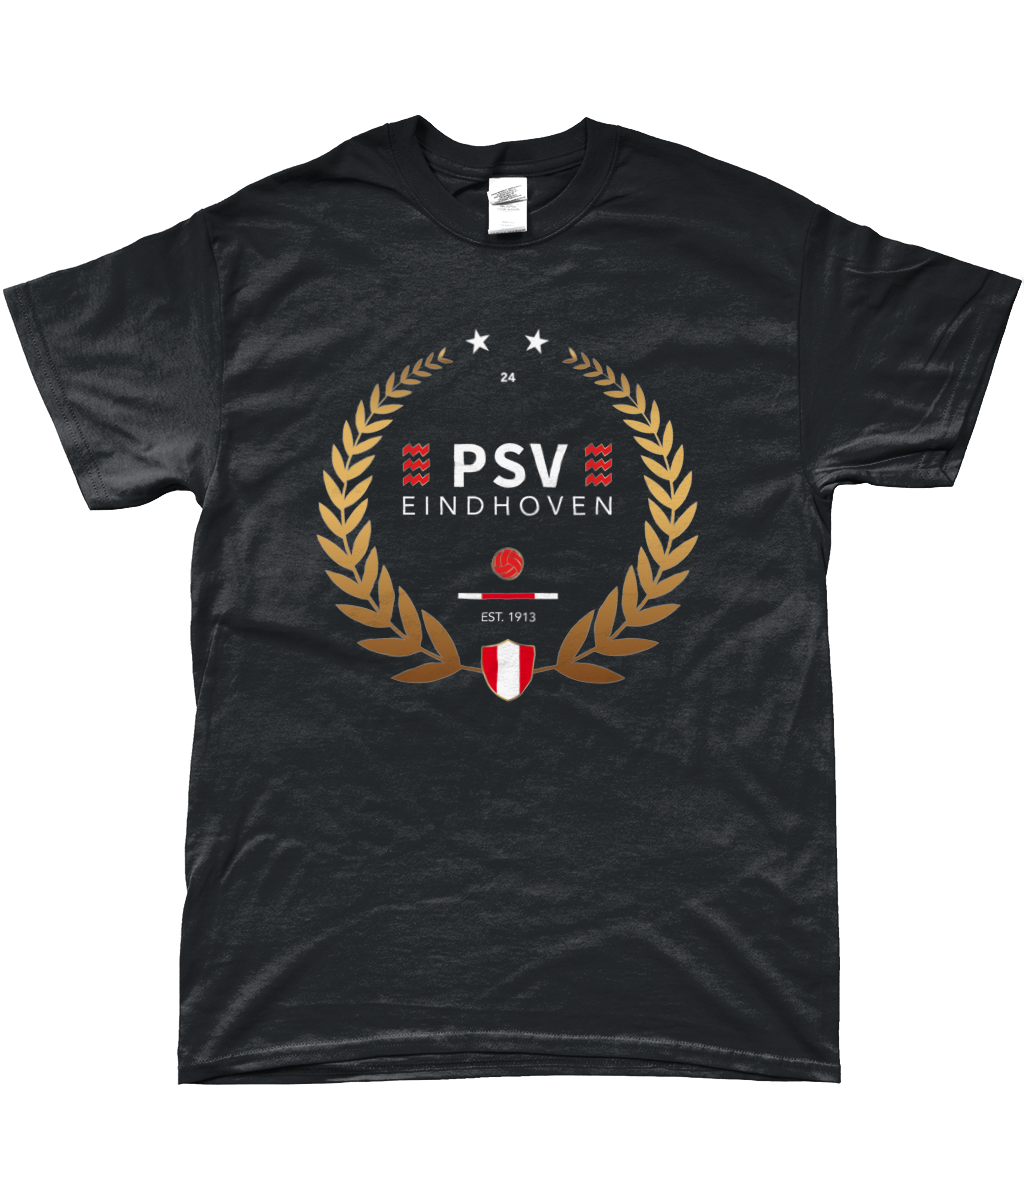 PSV - Gouden Krans T-shirt